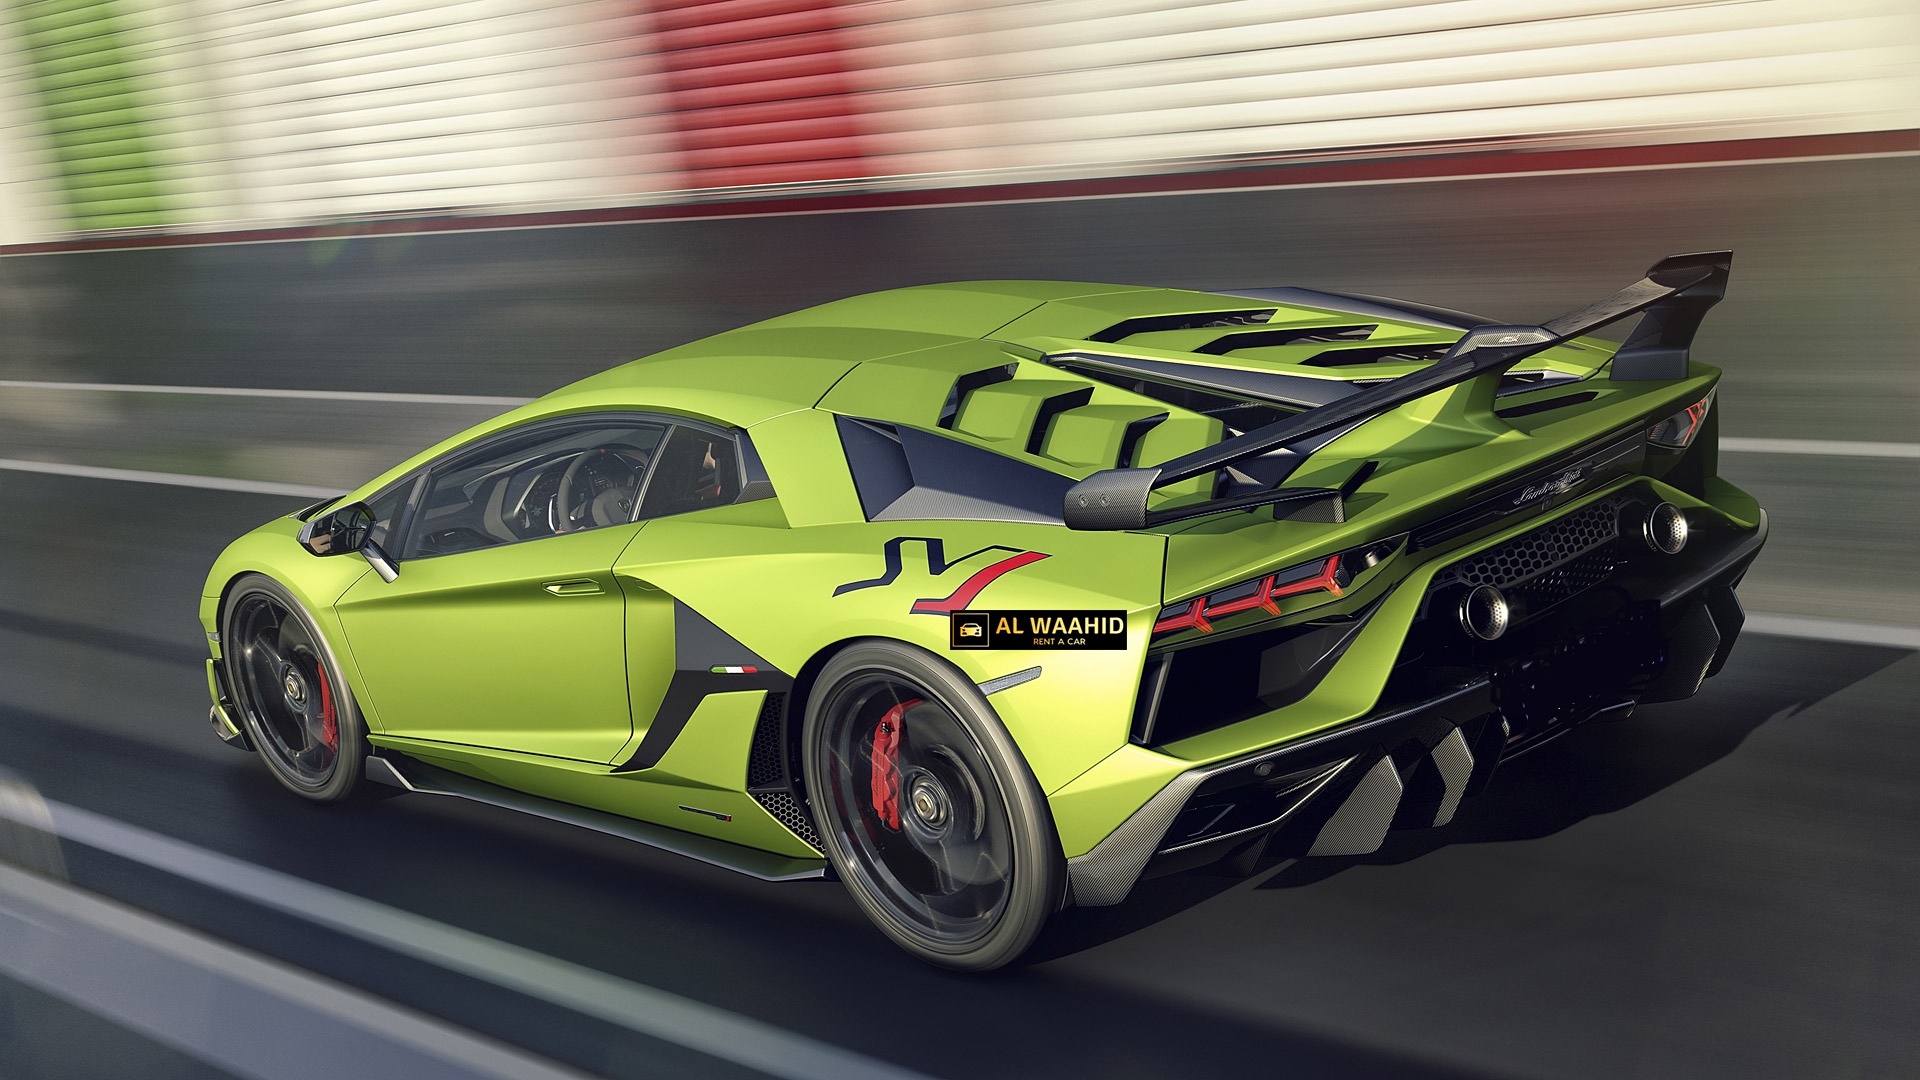 2019 Lamborghini Aventador SVJ rental dubai luxury cars alwaheed rental